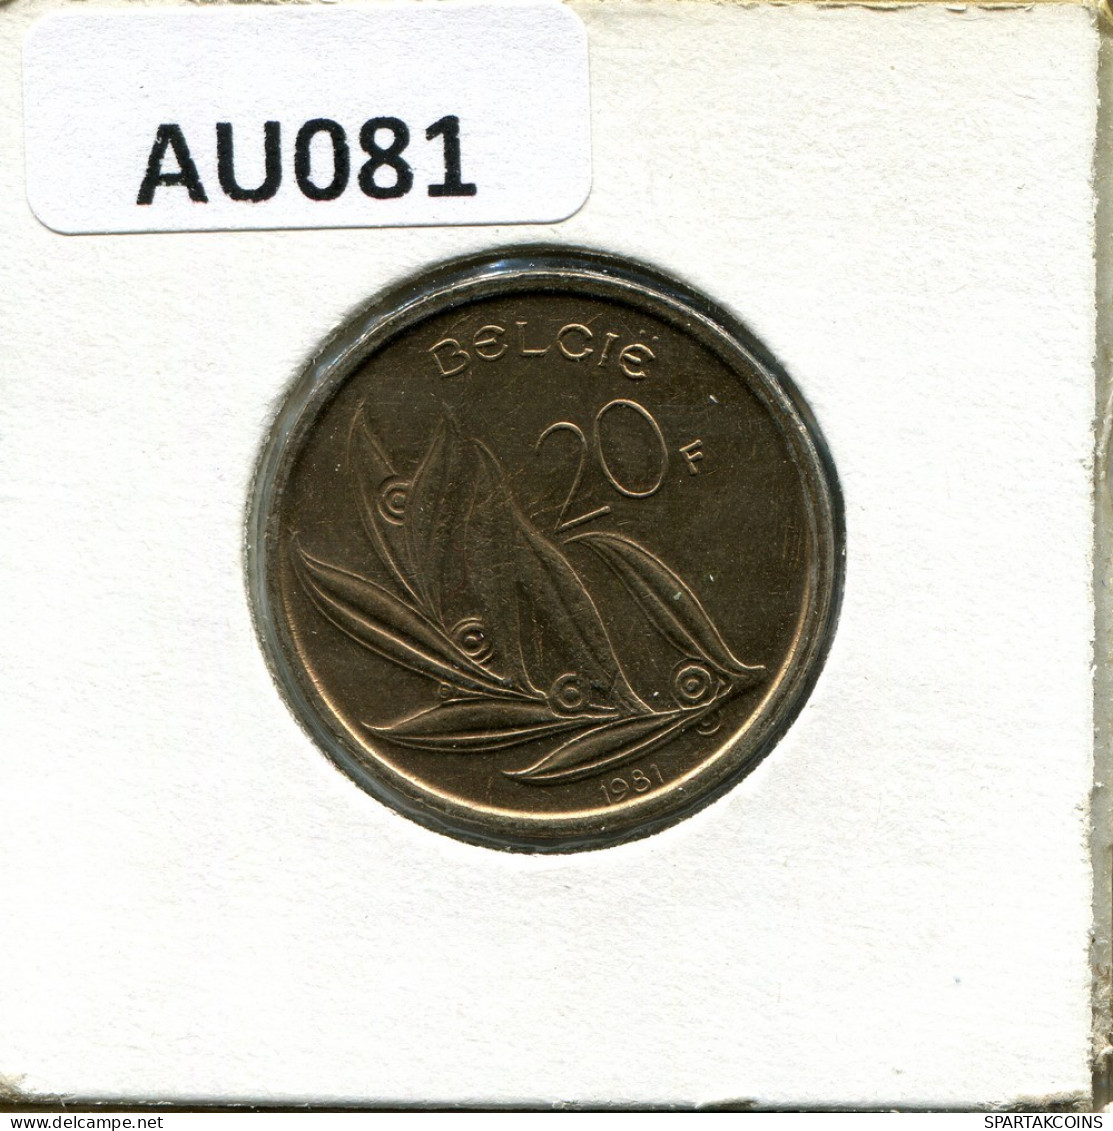 20 FRANCS 1981 DUTCH Text BELGIEN BELGIUM Münze #AU081.D.A - 20 Francs